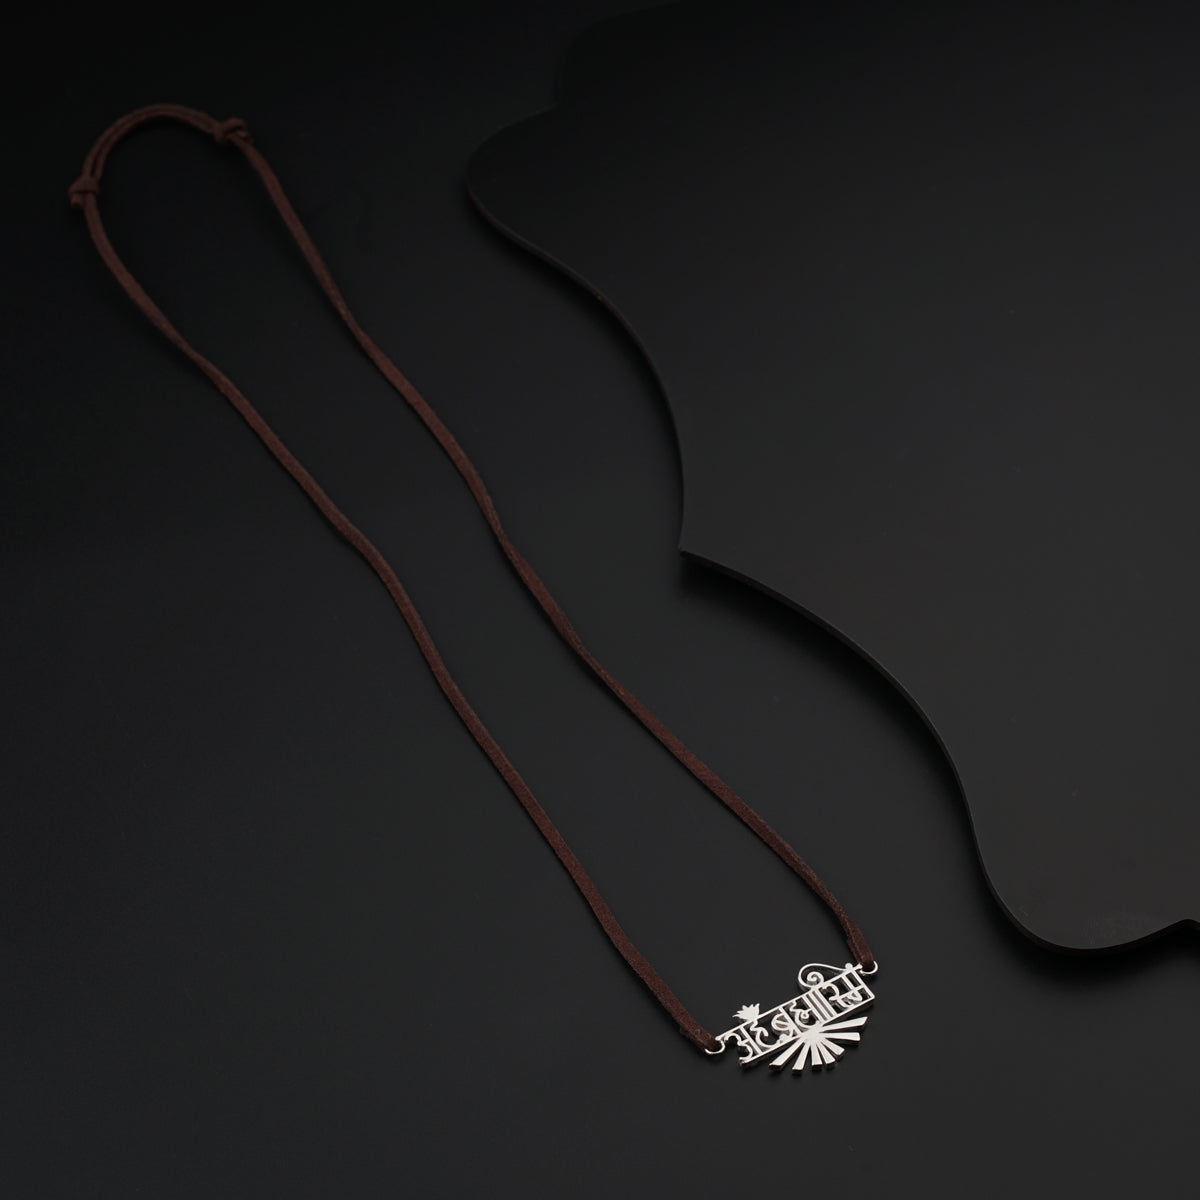 Ahambhramhasmi (अहंब्रह्मास्मि) Silver Necklace with Suede Cord